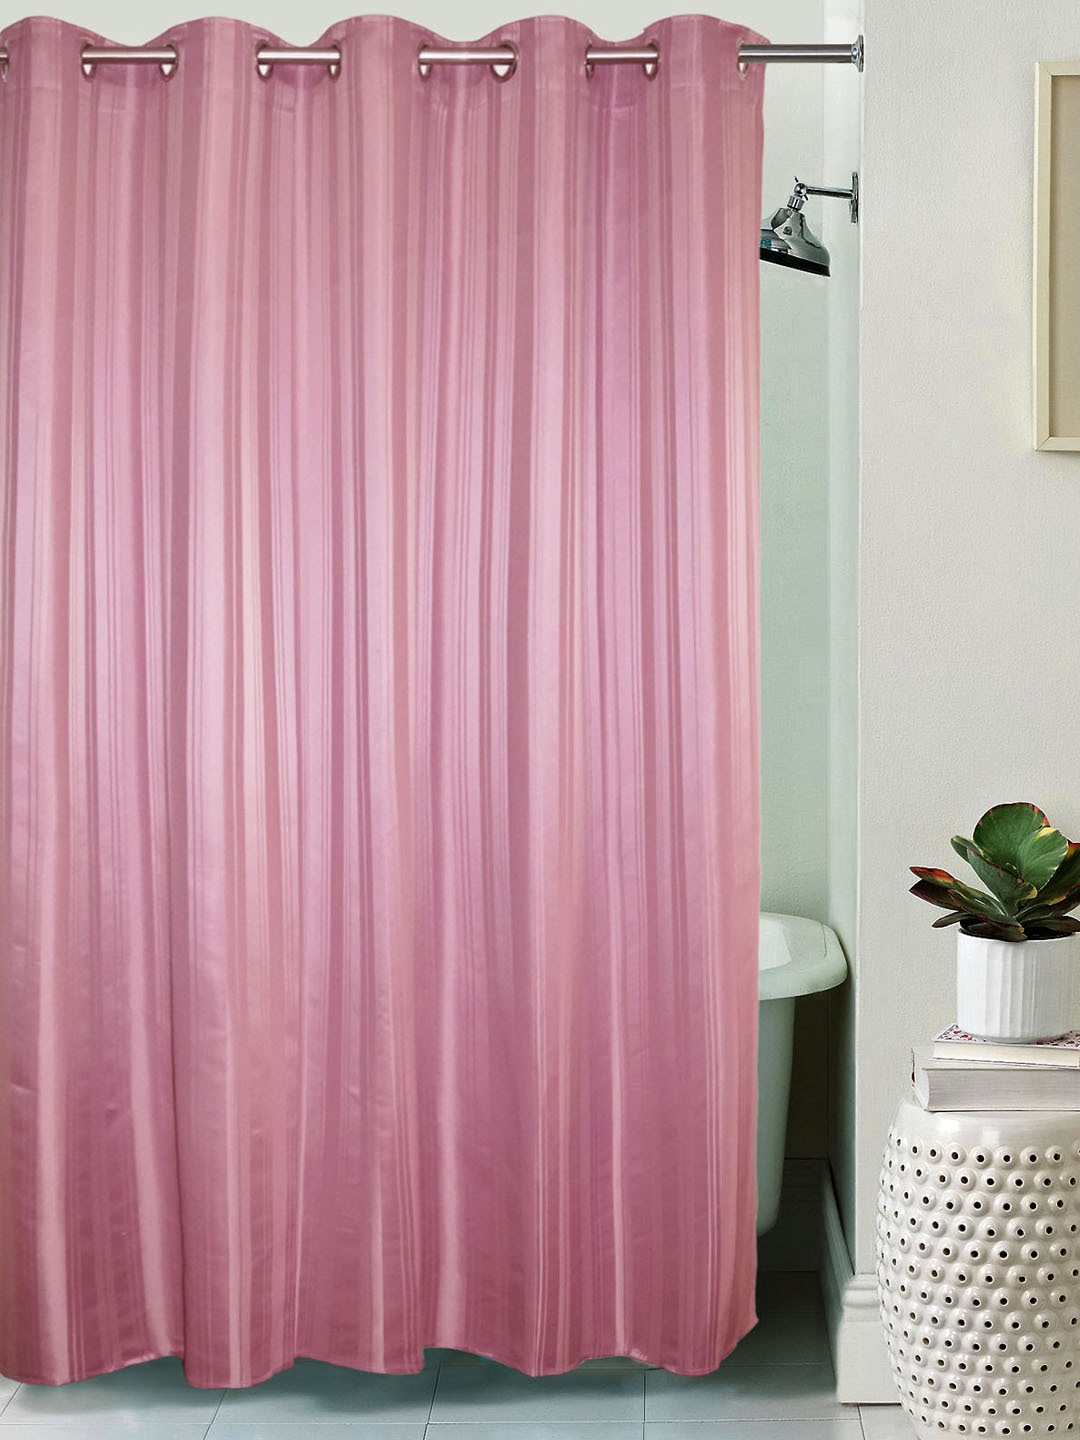 Lushomes Purple Striped Waterproof Shower Curtain